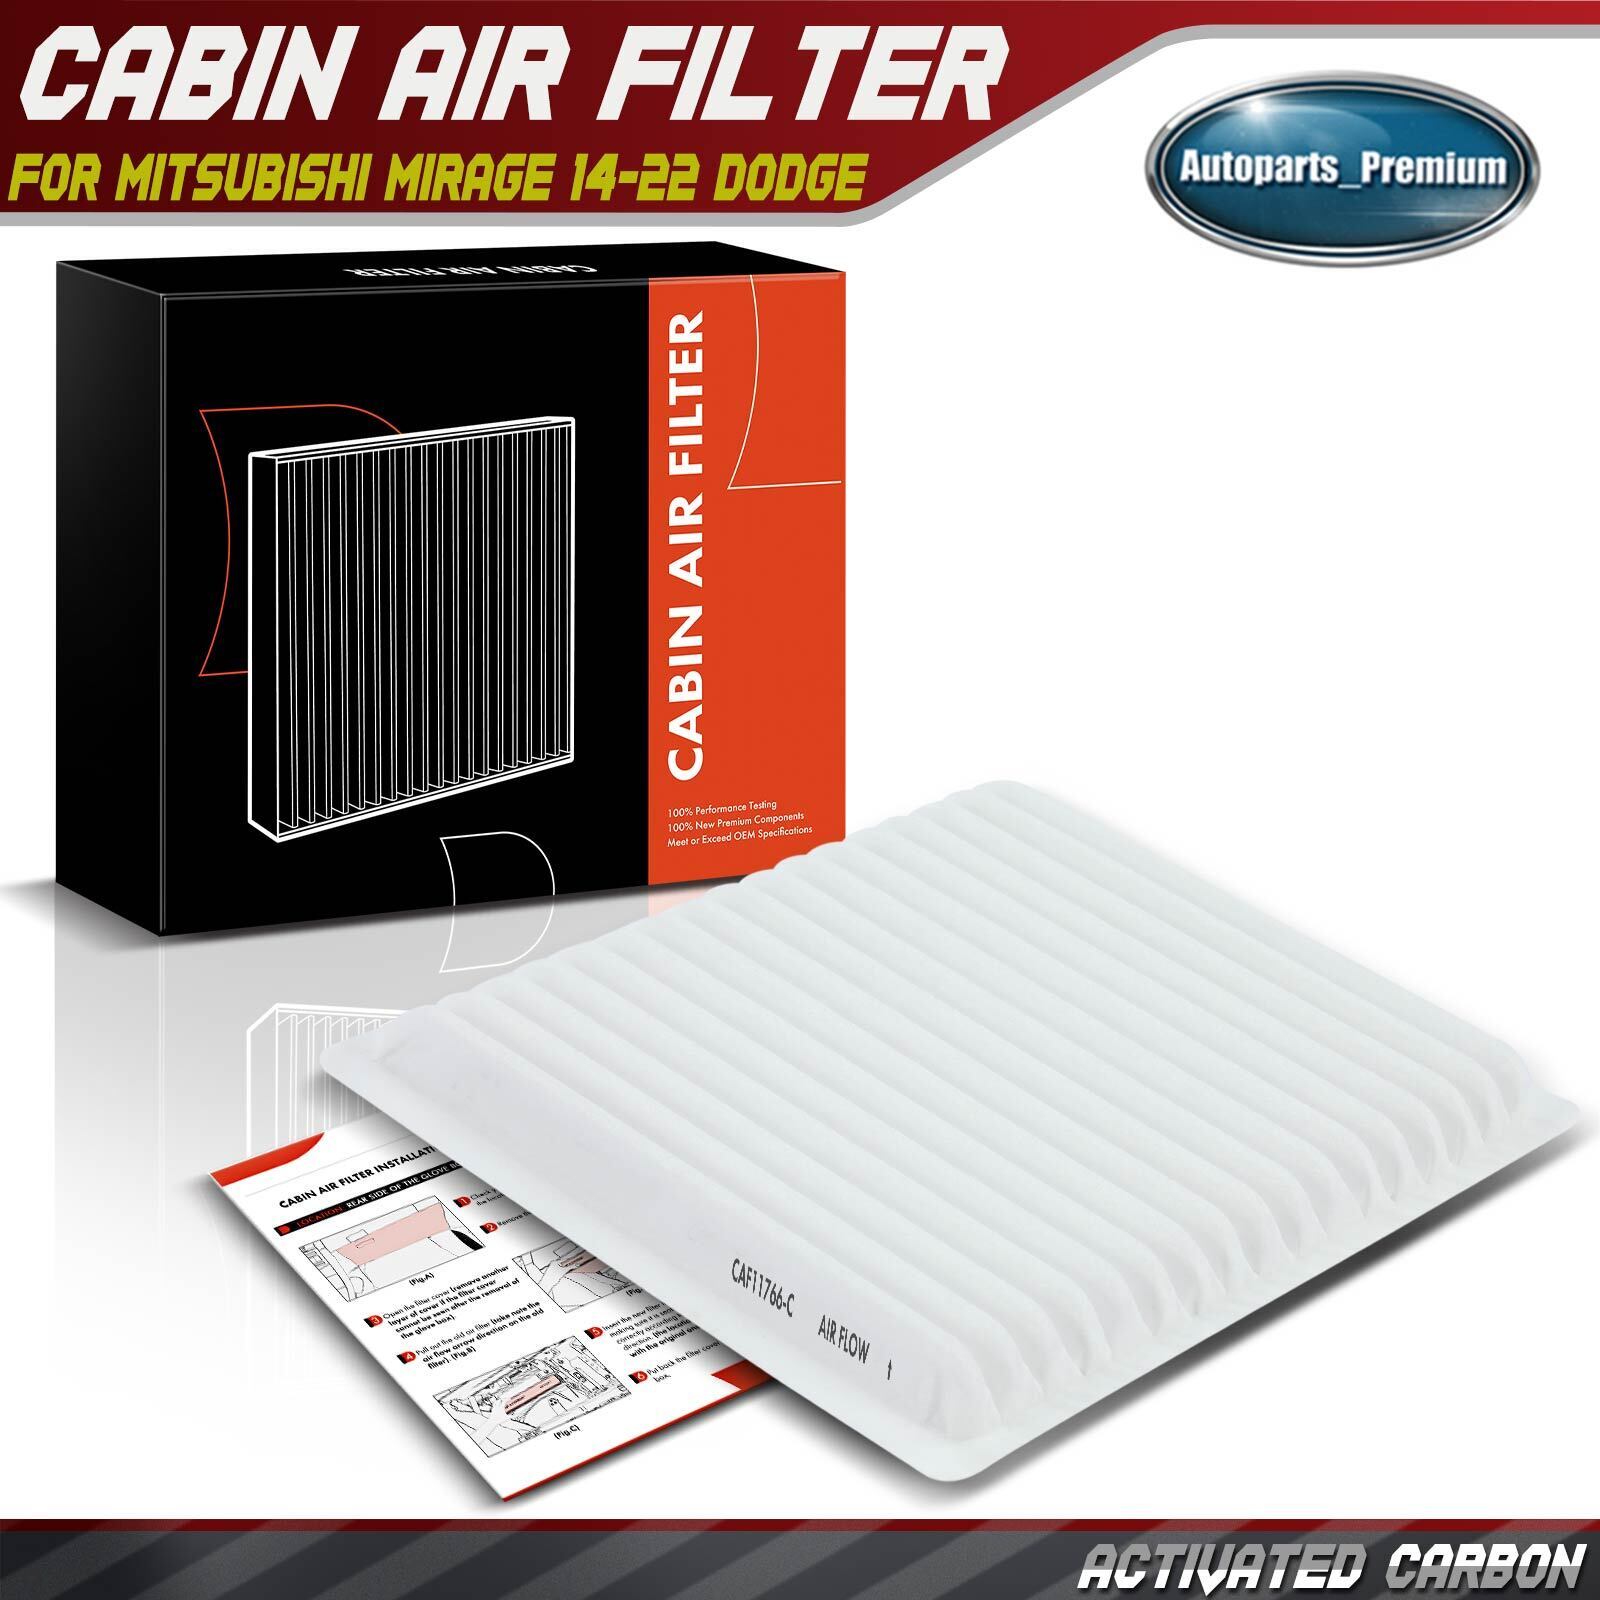 Cabin Air Filter for Mitsubishi Mirage 2014-2022 Mirage G4 17-22 Dodge Attitude